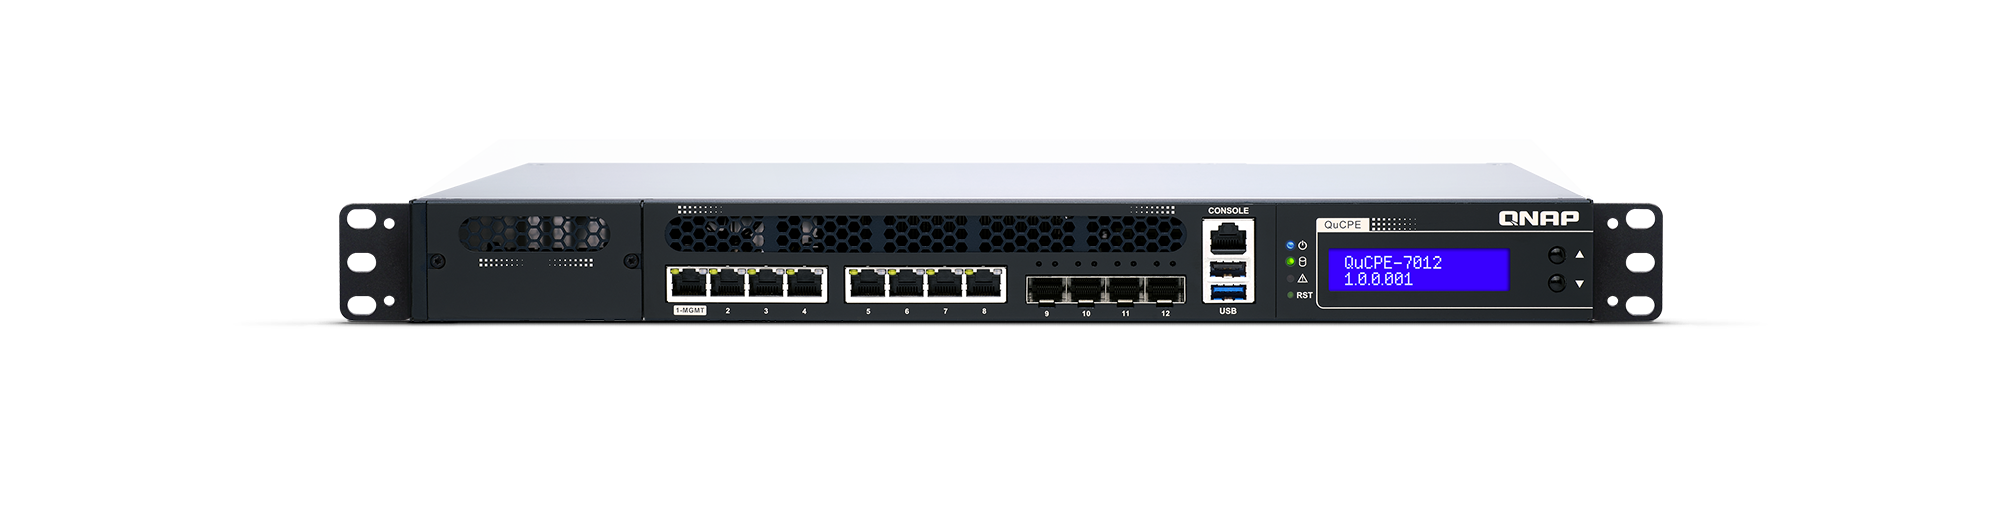 QuCPE-7012 Network Virtualization Premise Equipment